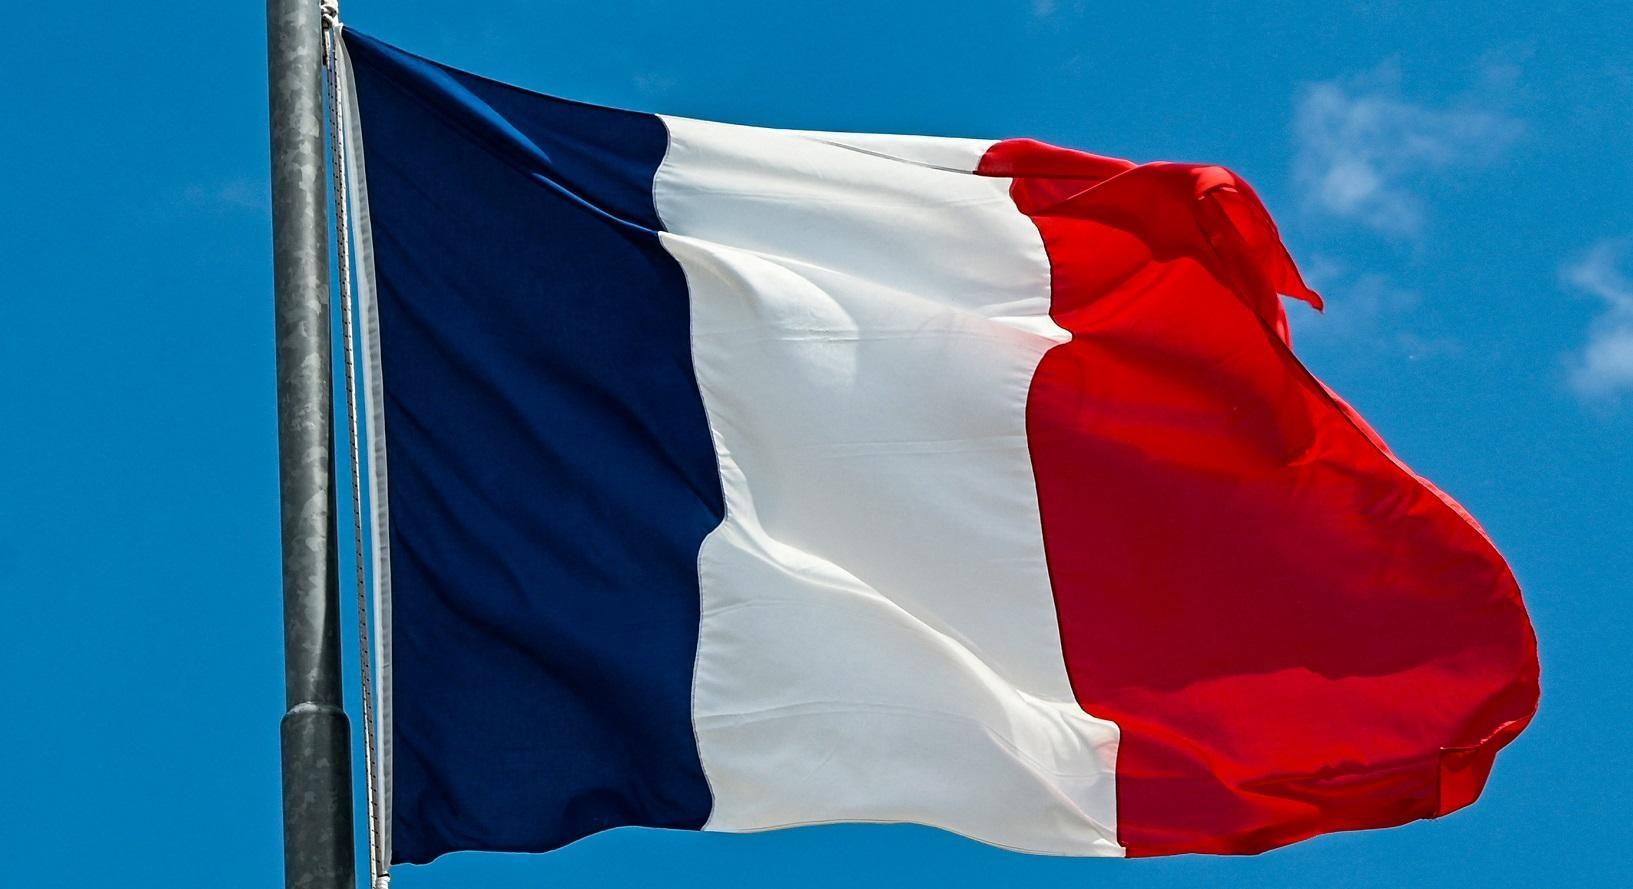 Prancis menghadapi gelombang baru COVID-19, kata kepala vaksinasi GMA News Online